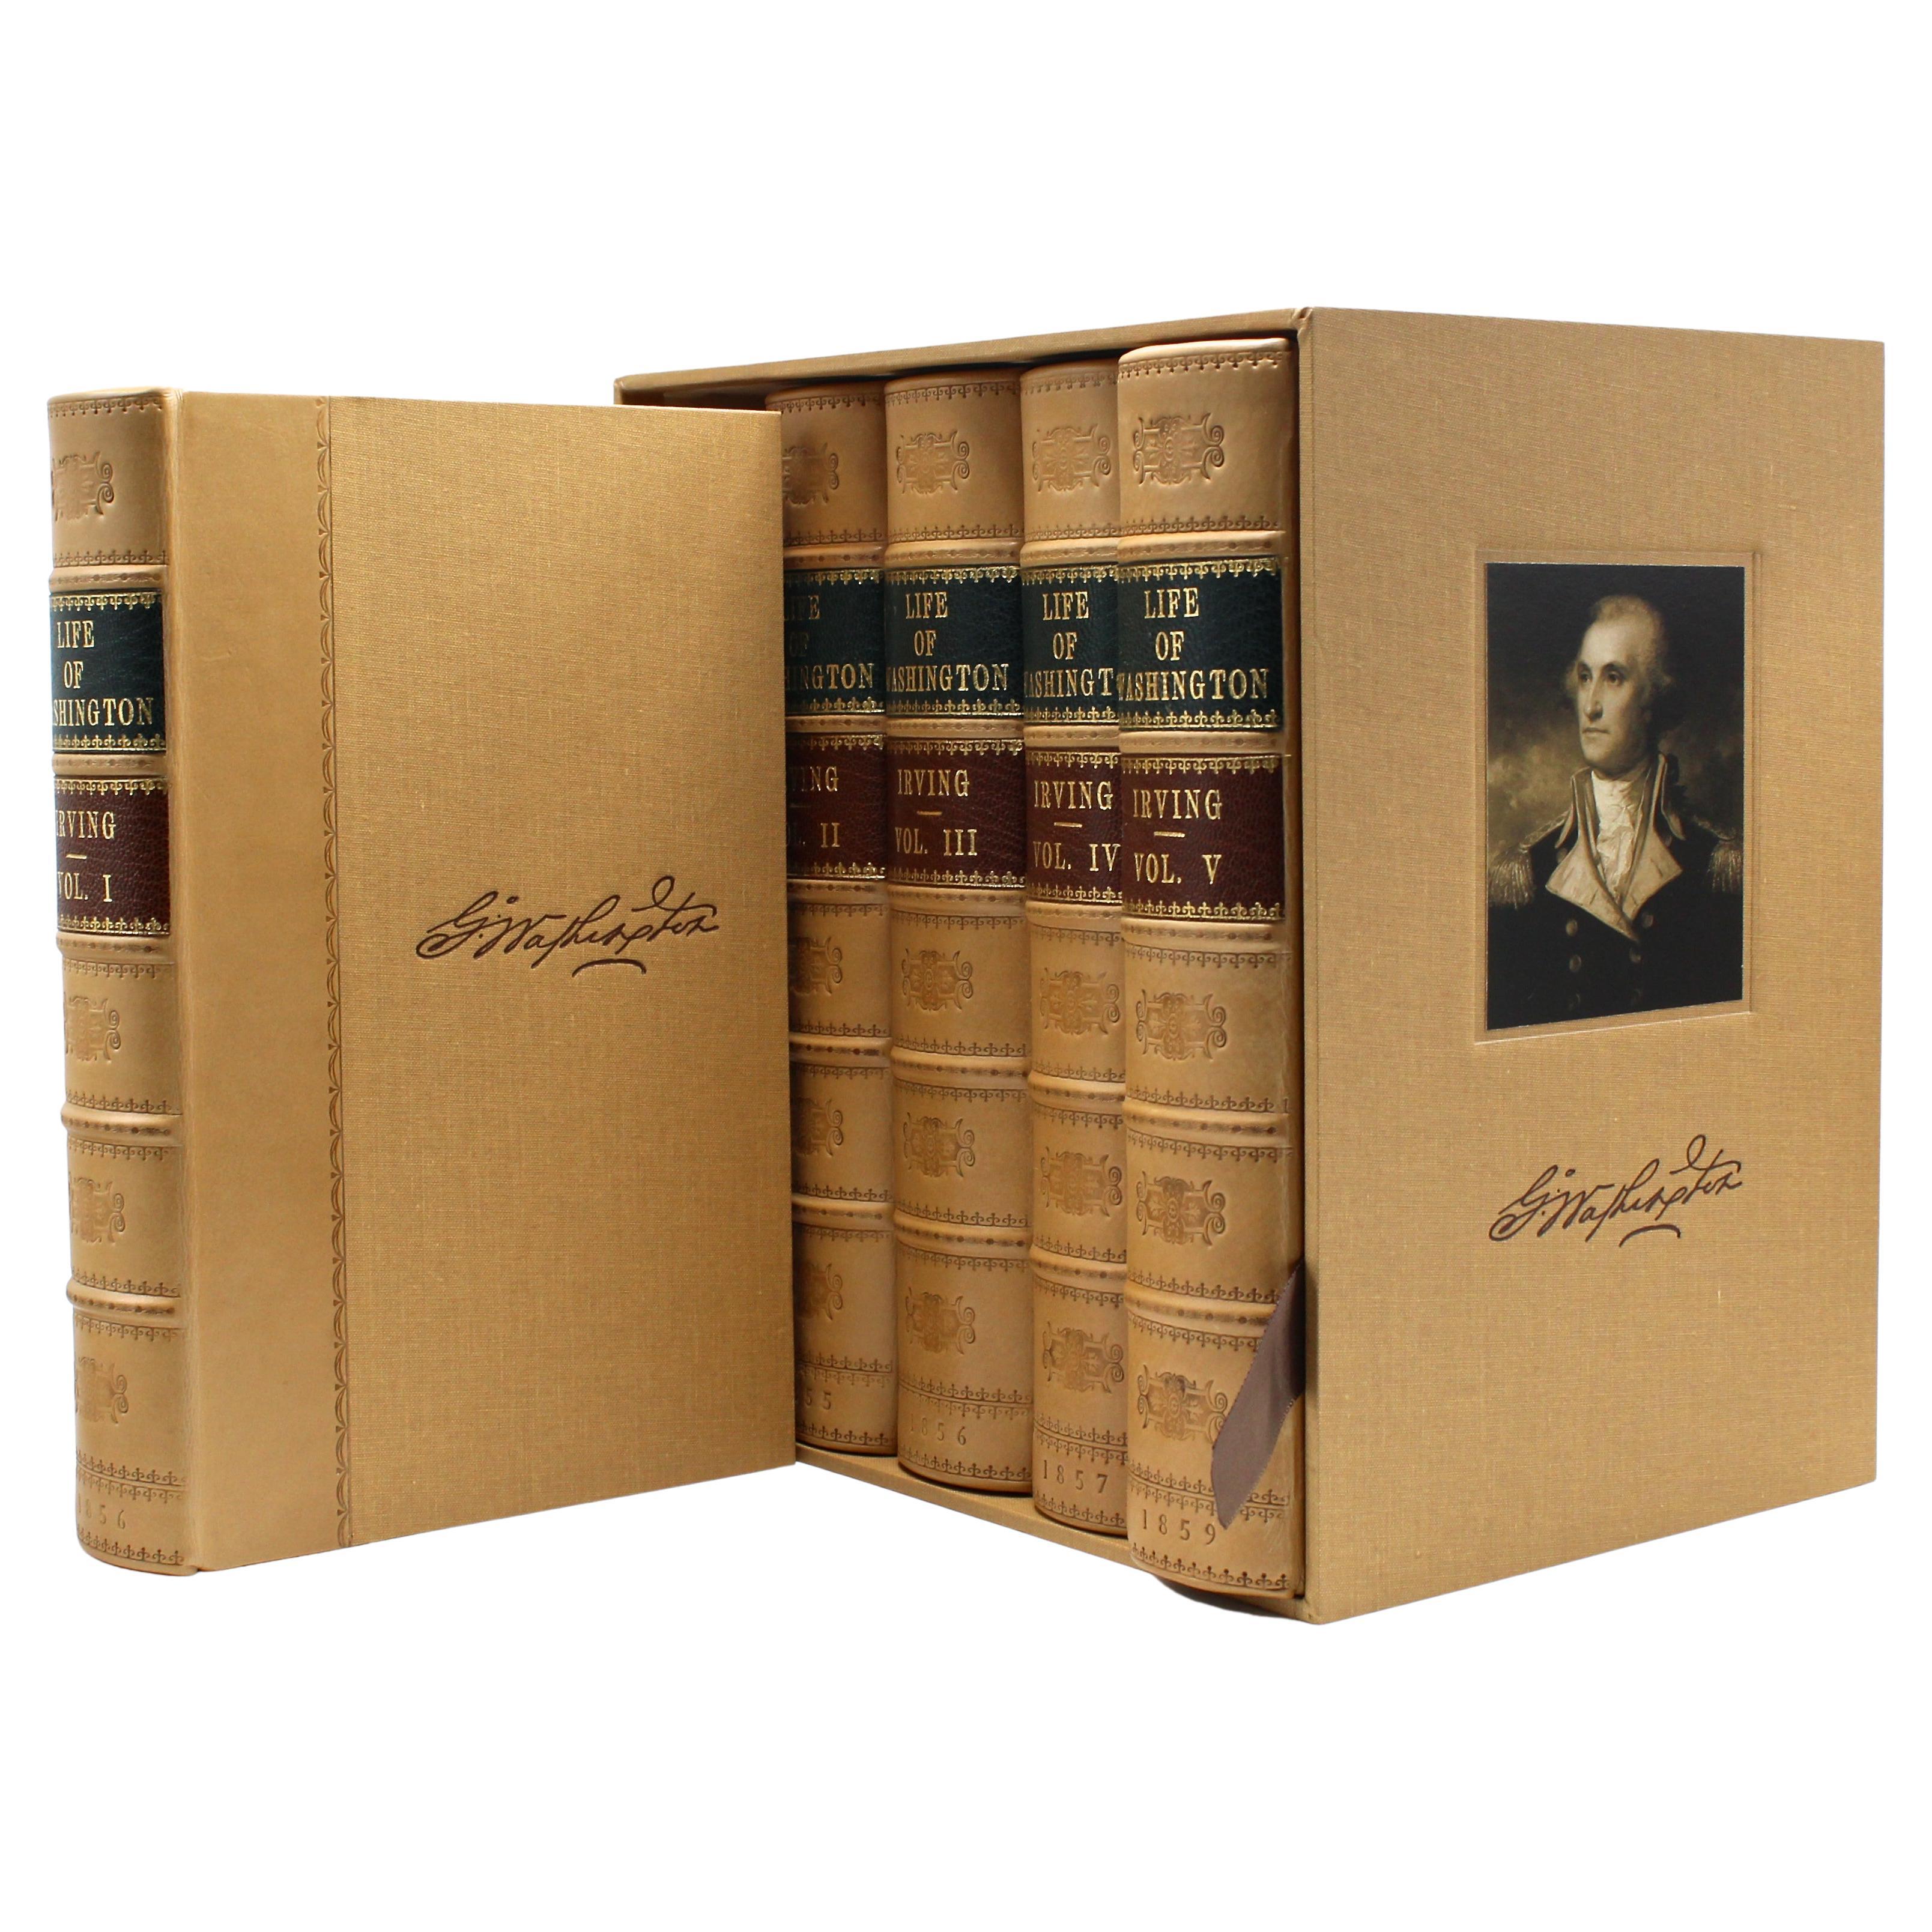 The Life of George Washington by Washington Irving, Five Volumes, 1856-1859